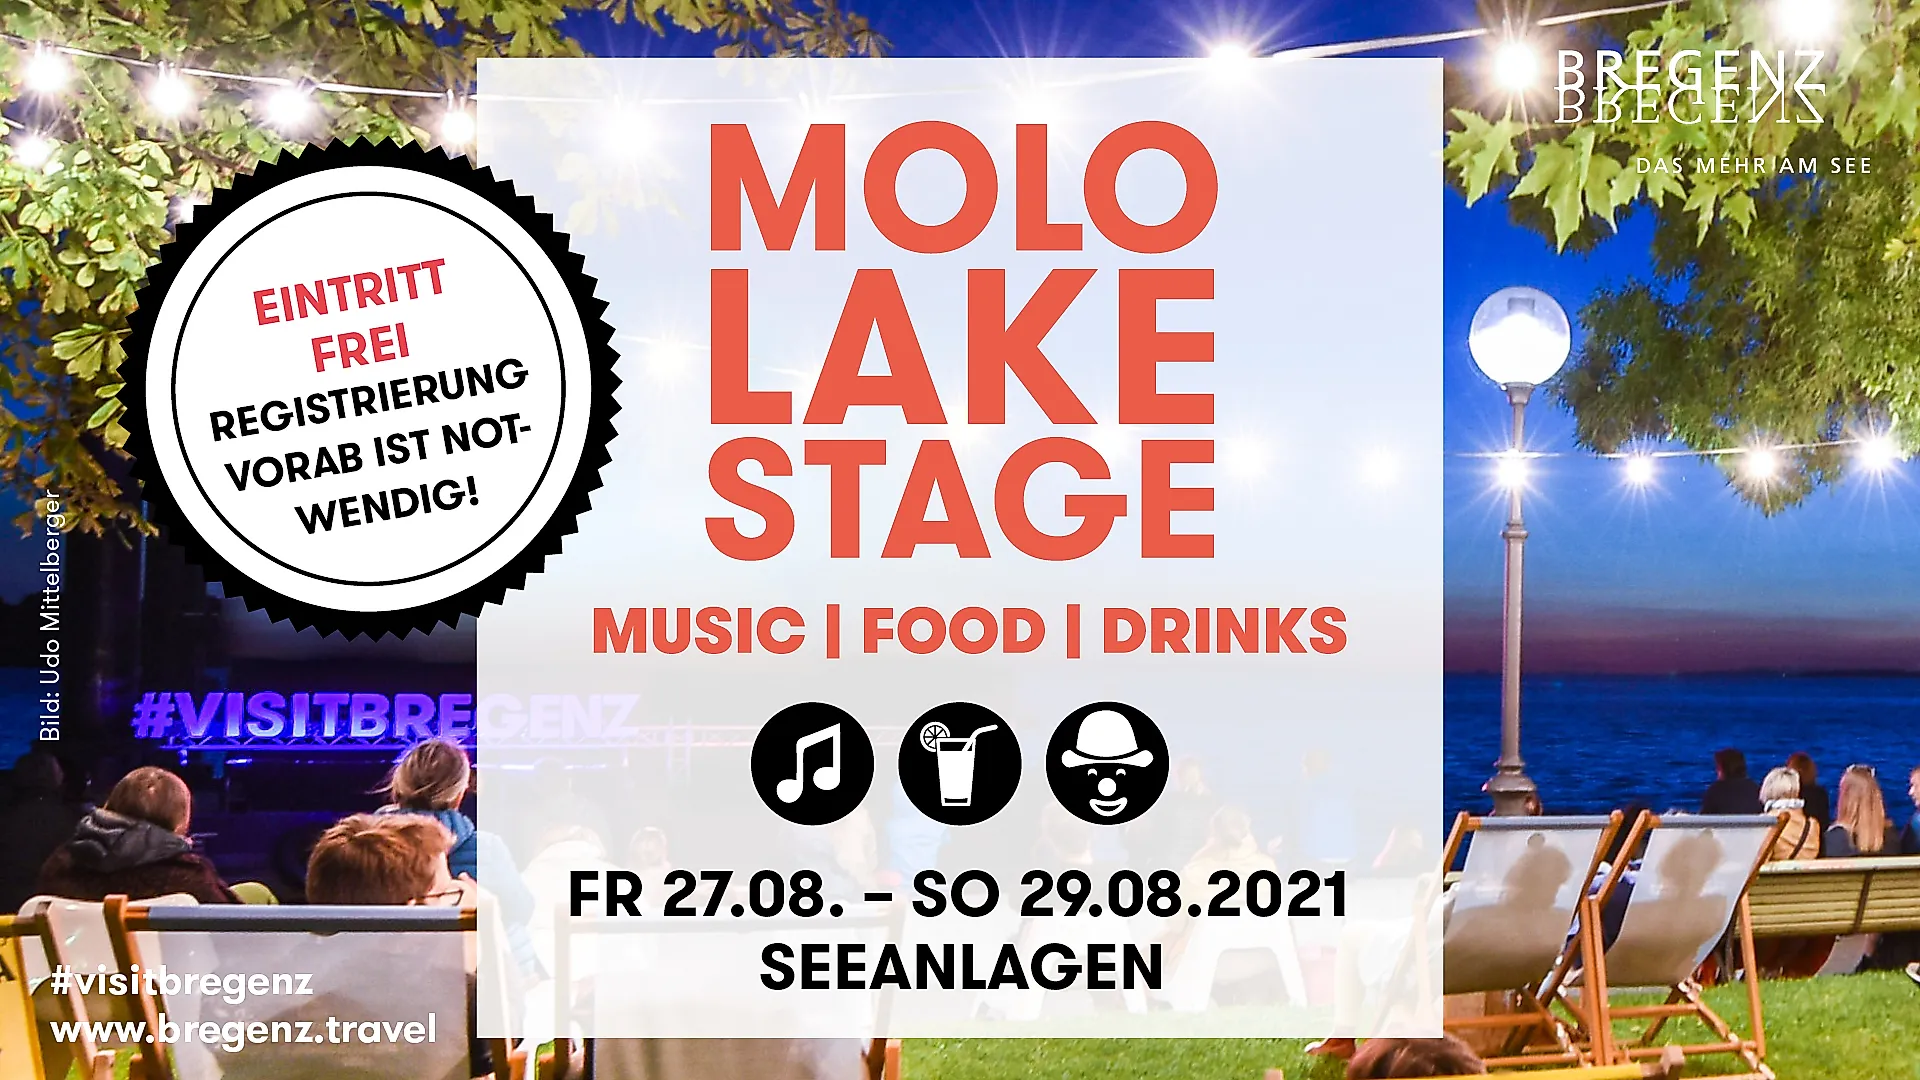 BRE_Molo Lake Stage_2021_FB.jpg